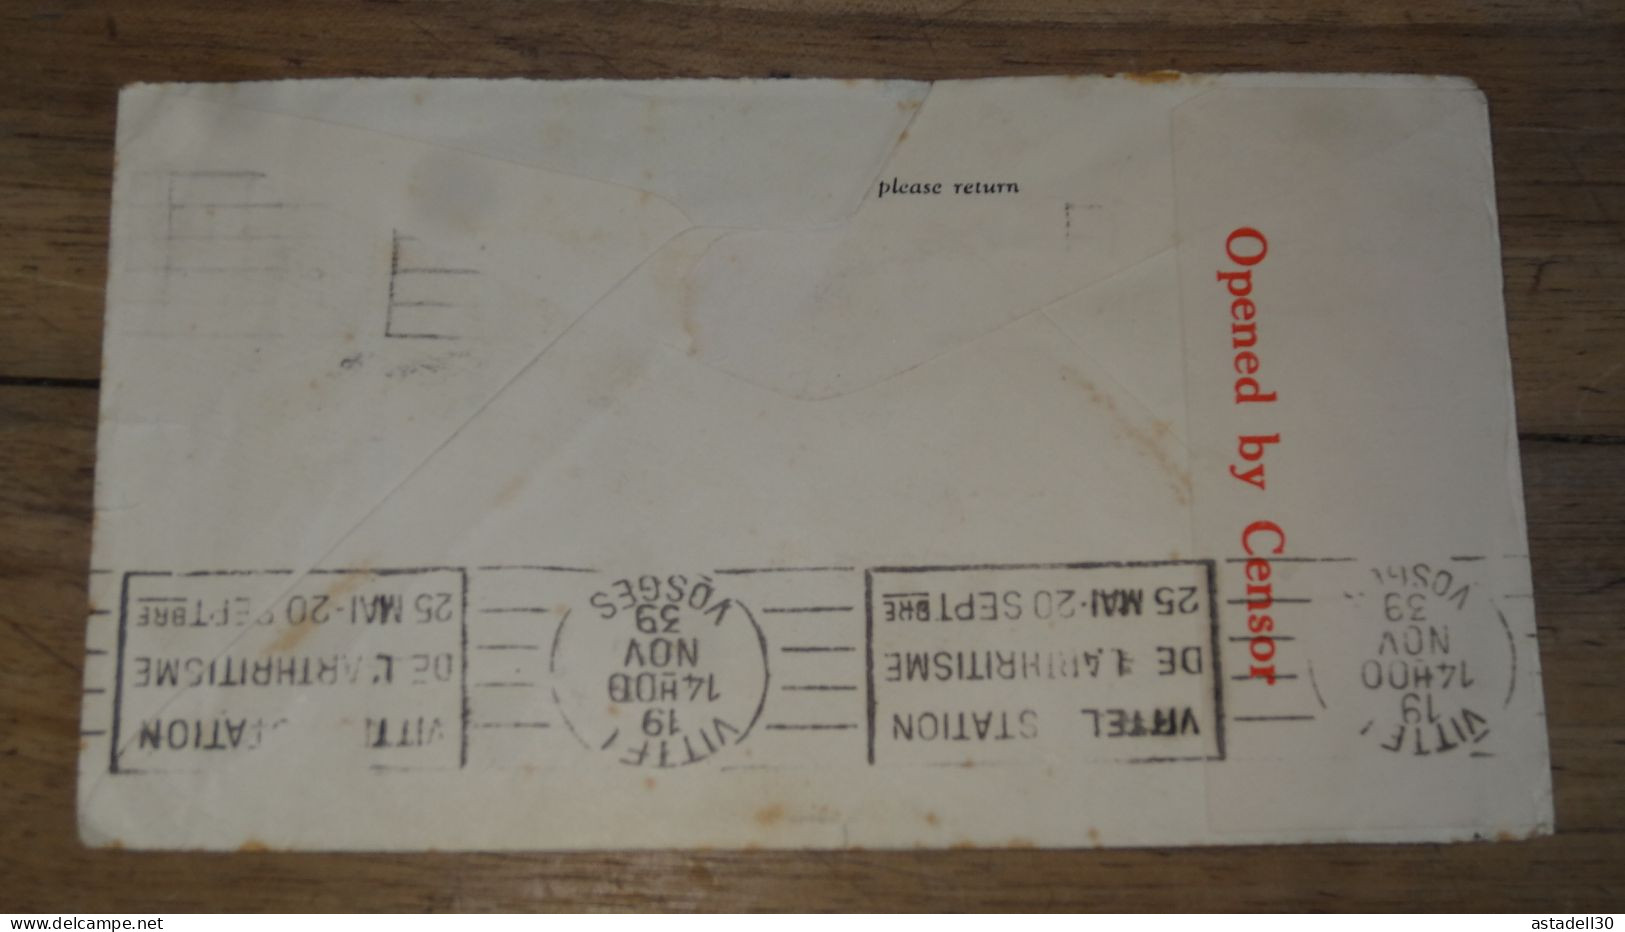 Enveloppe AUSTRALIA, Melbourne, Censure - 1939 ......... Boite1 ..... 240424-190 - Covers & Documents